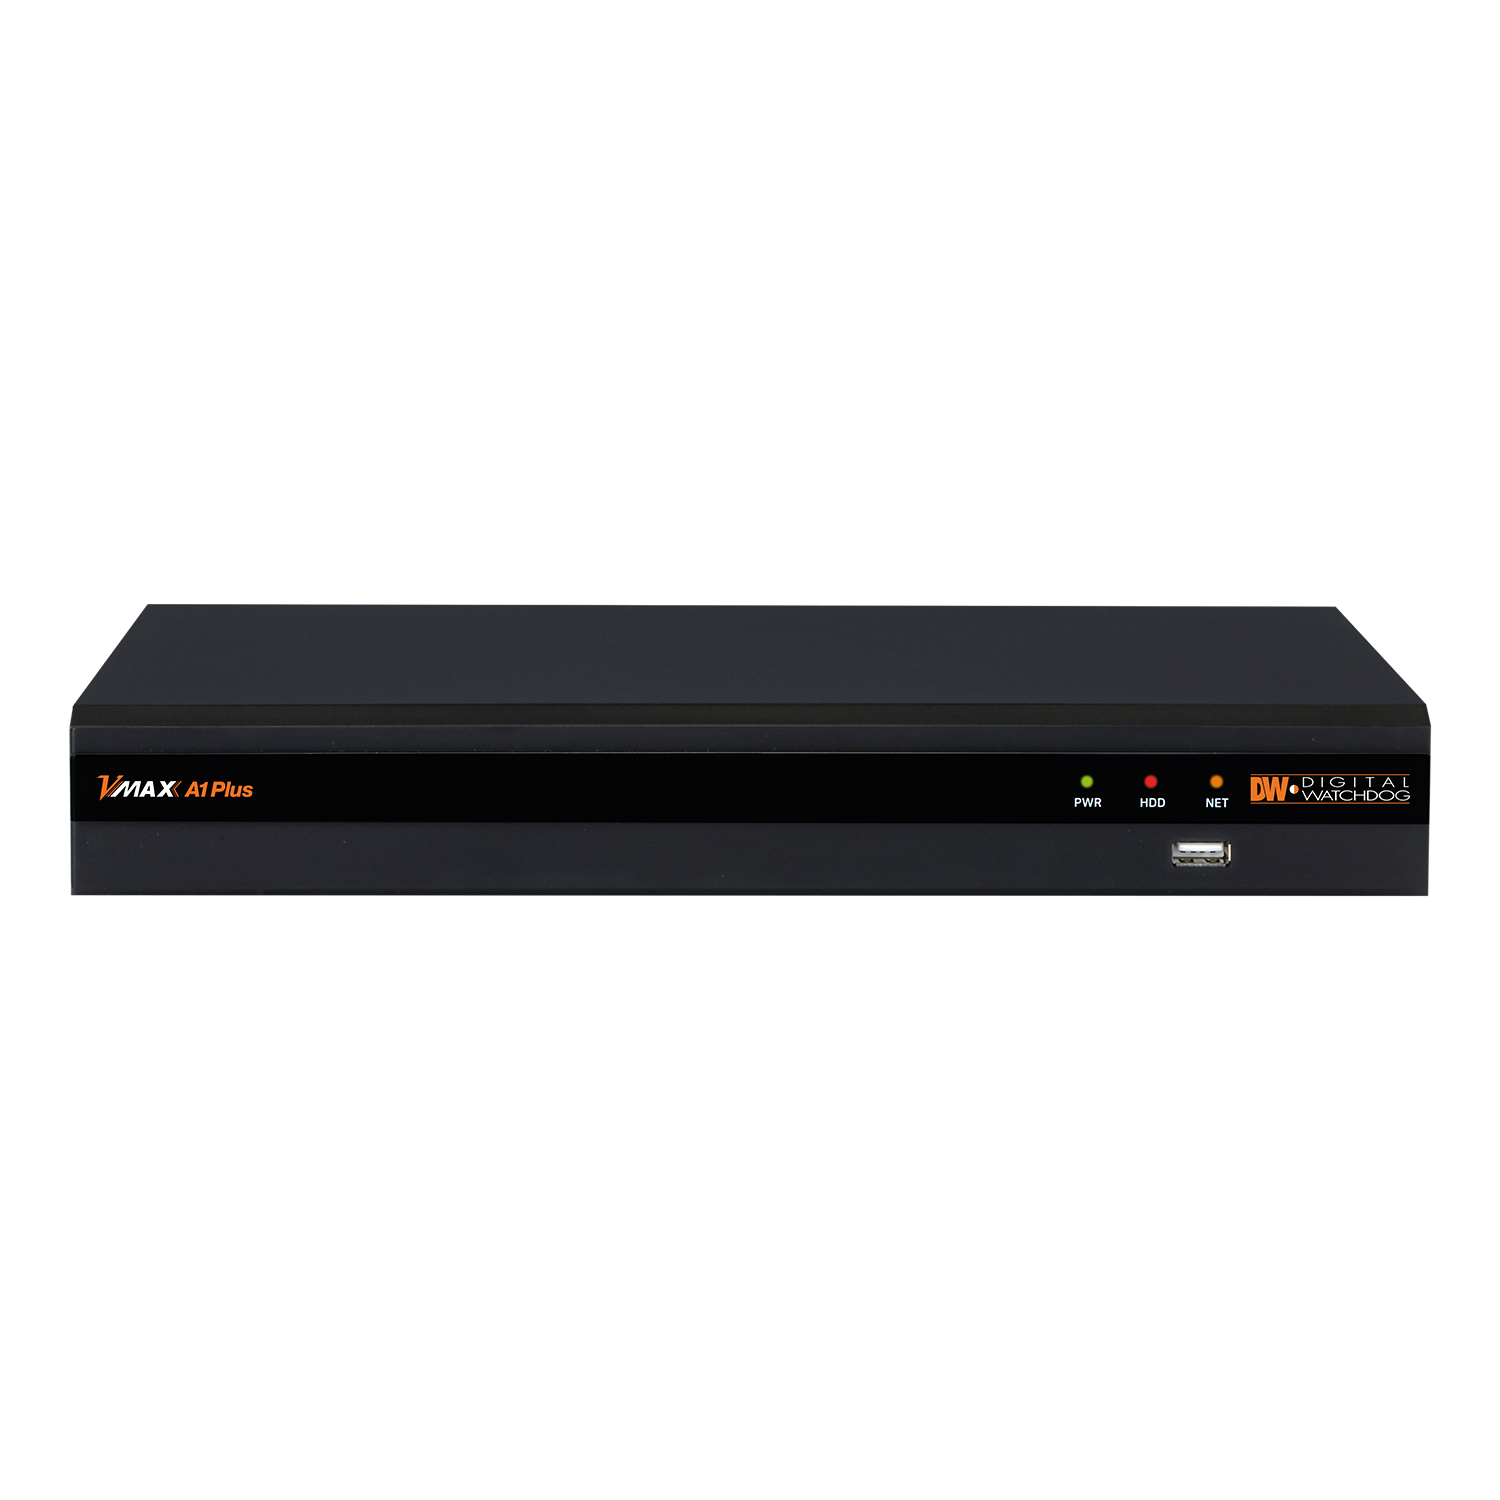 Digital Watchdog DW-VA1P416T, Universal HD Over Coax 4-Channel 16TB Storage DVR